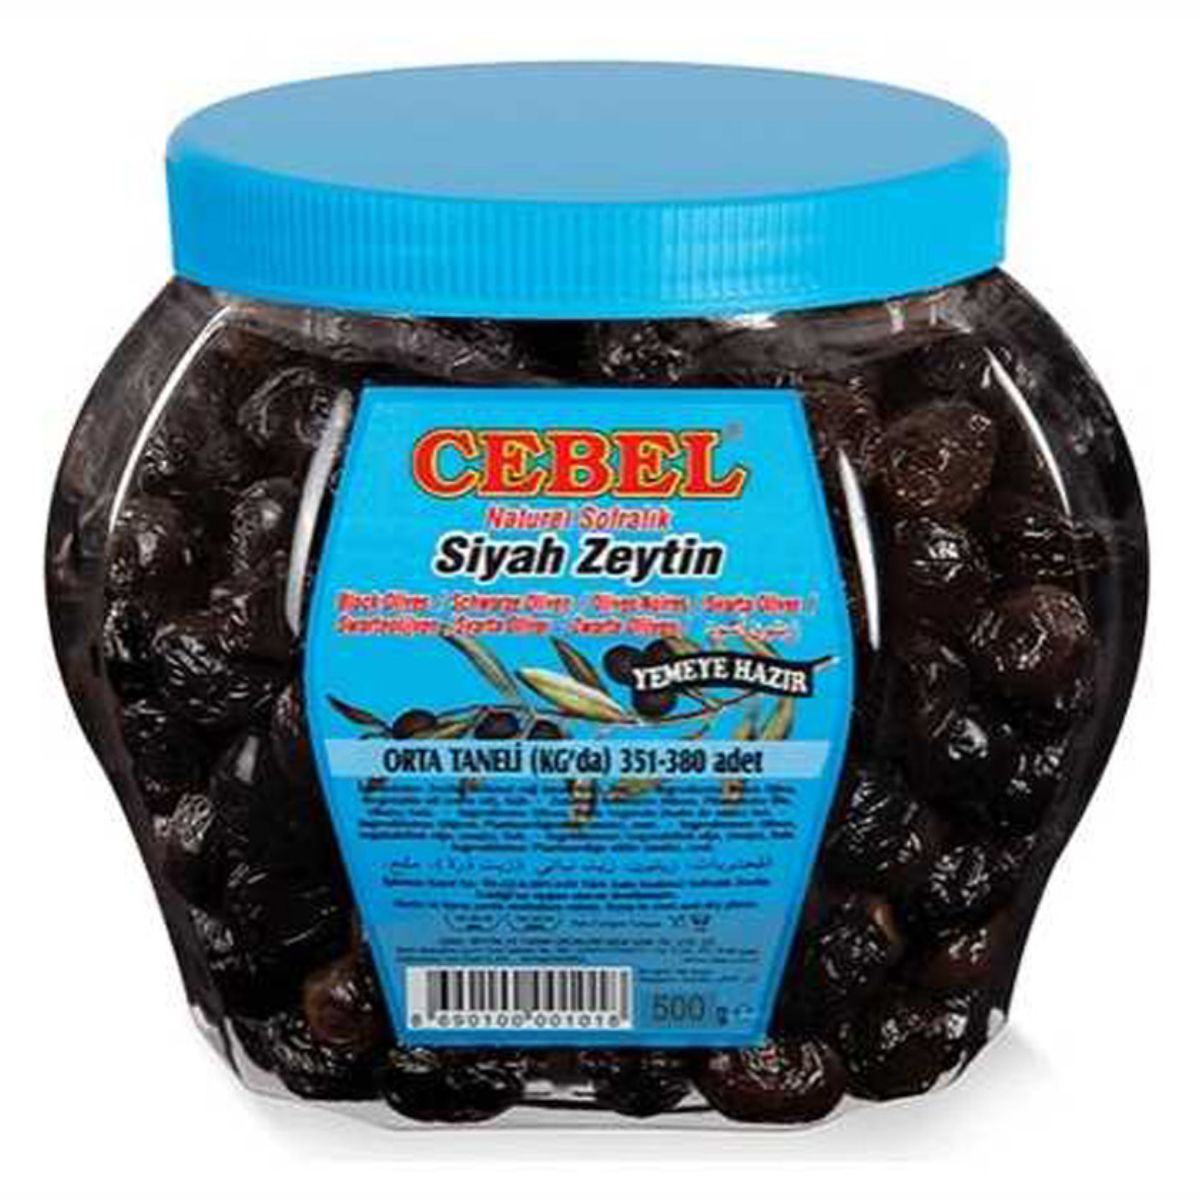 A jar of Cebel - Black Olive - 500g on a white background.